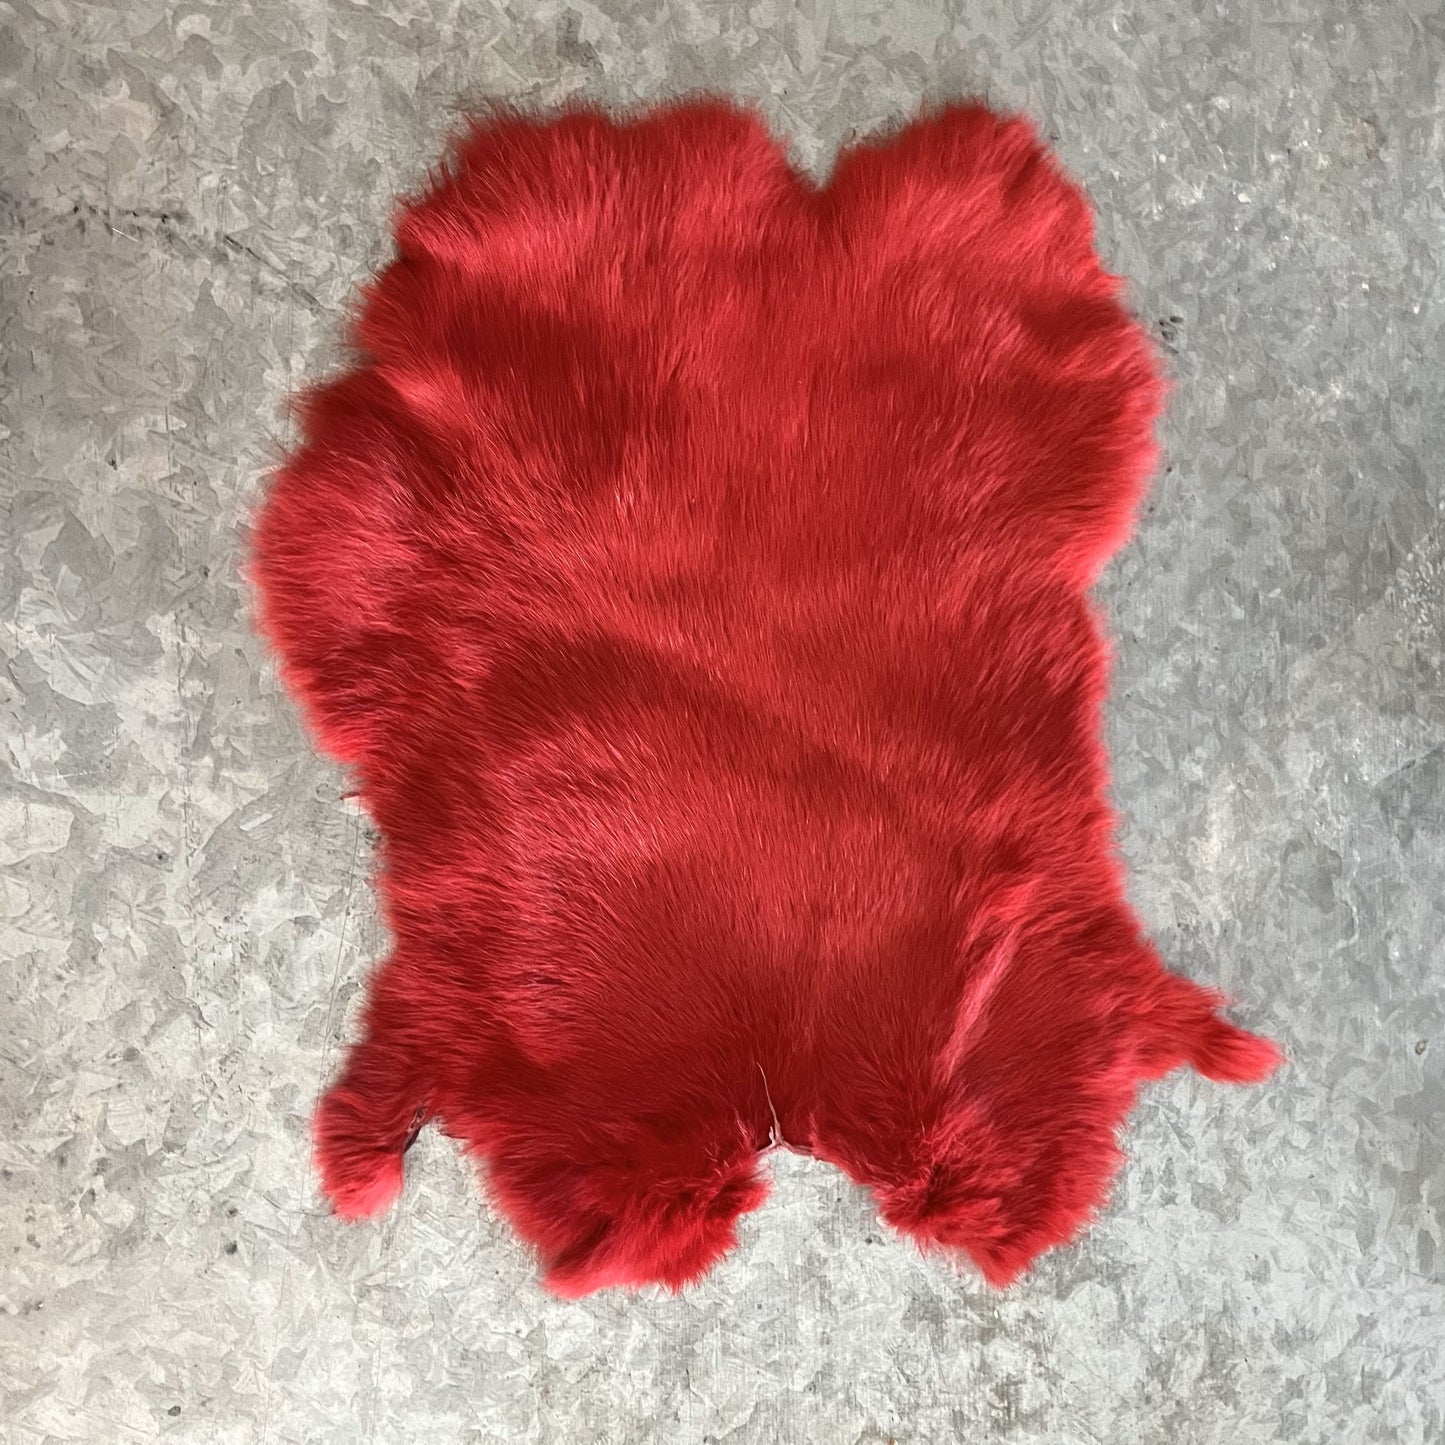 Rabbit Fur - Dyed Red